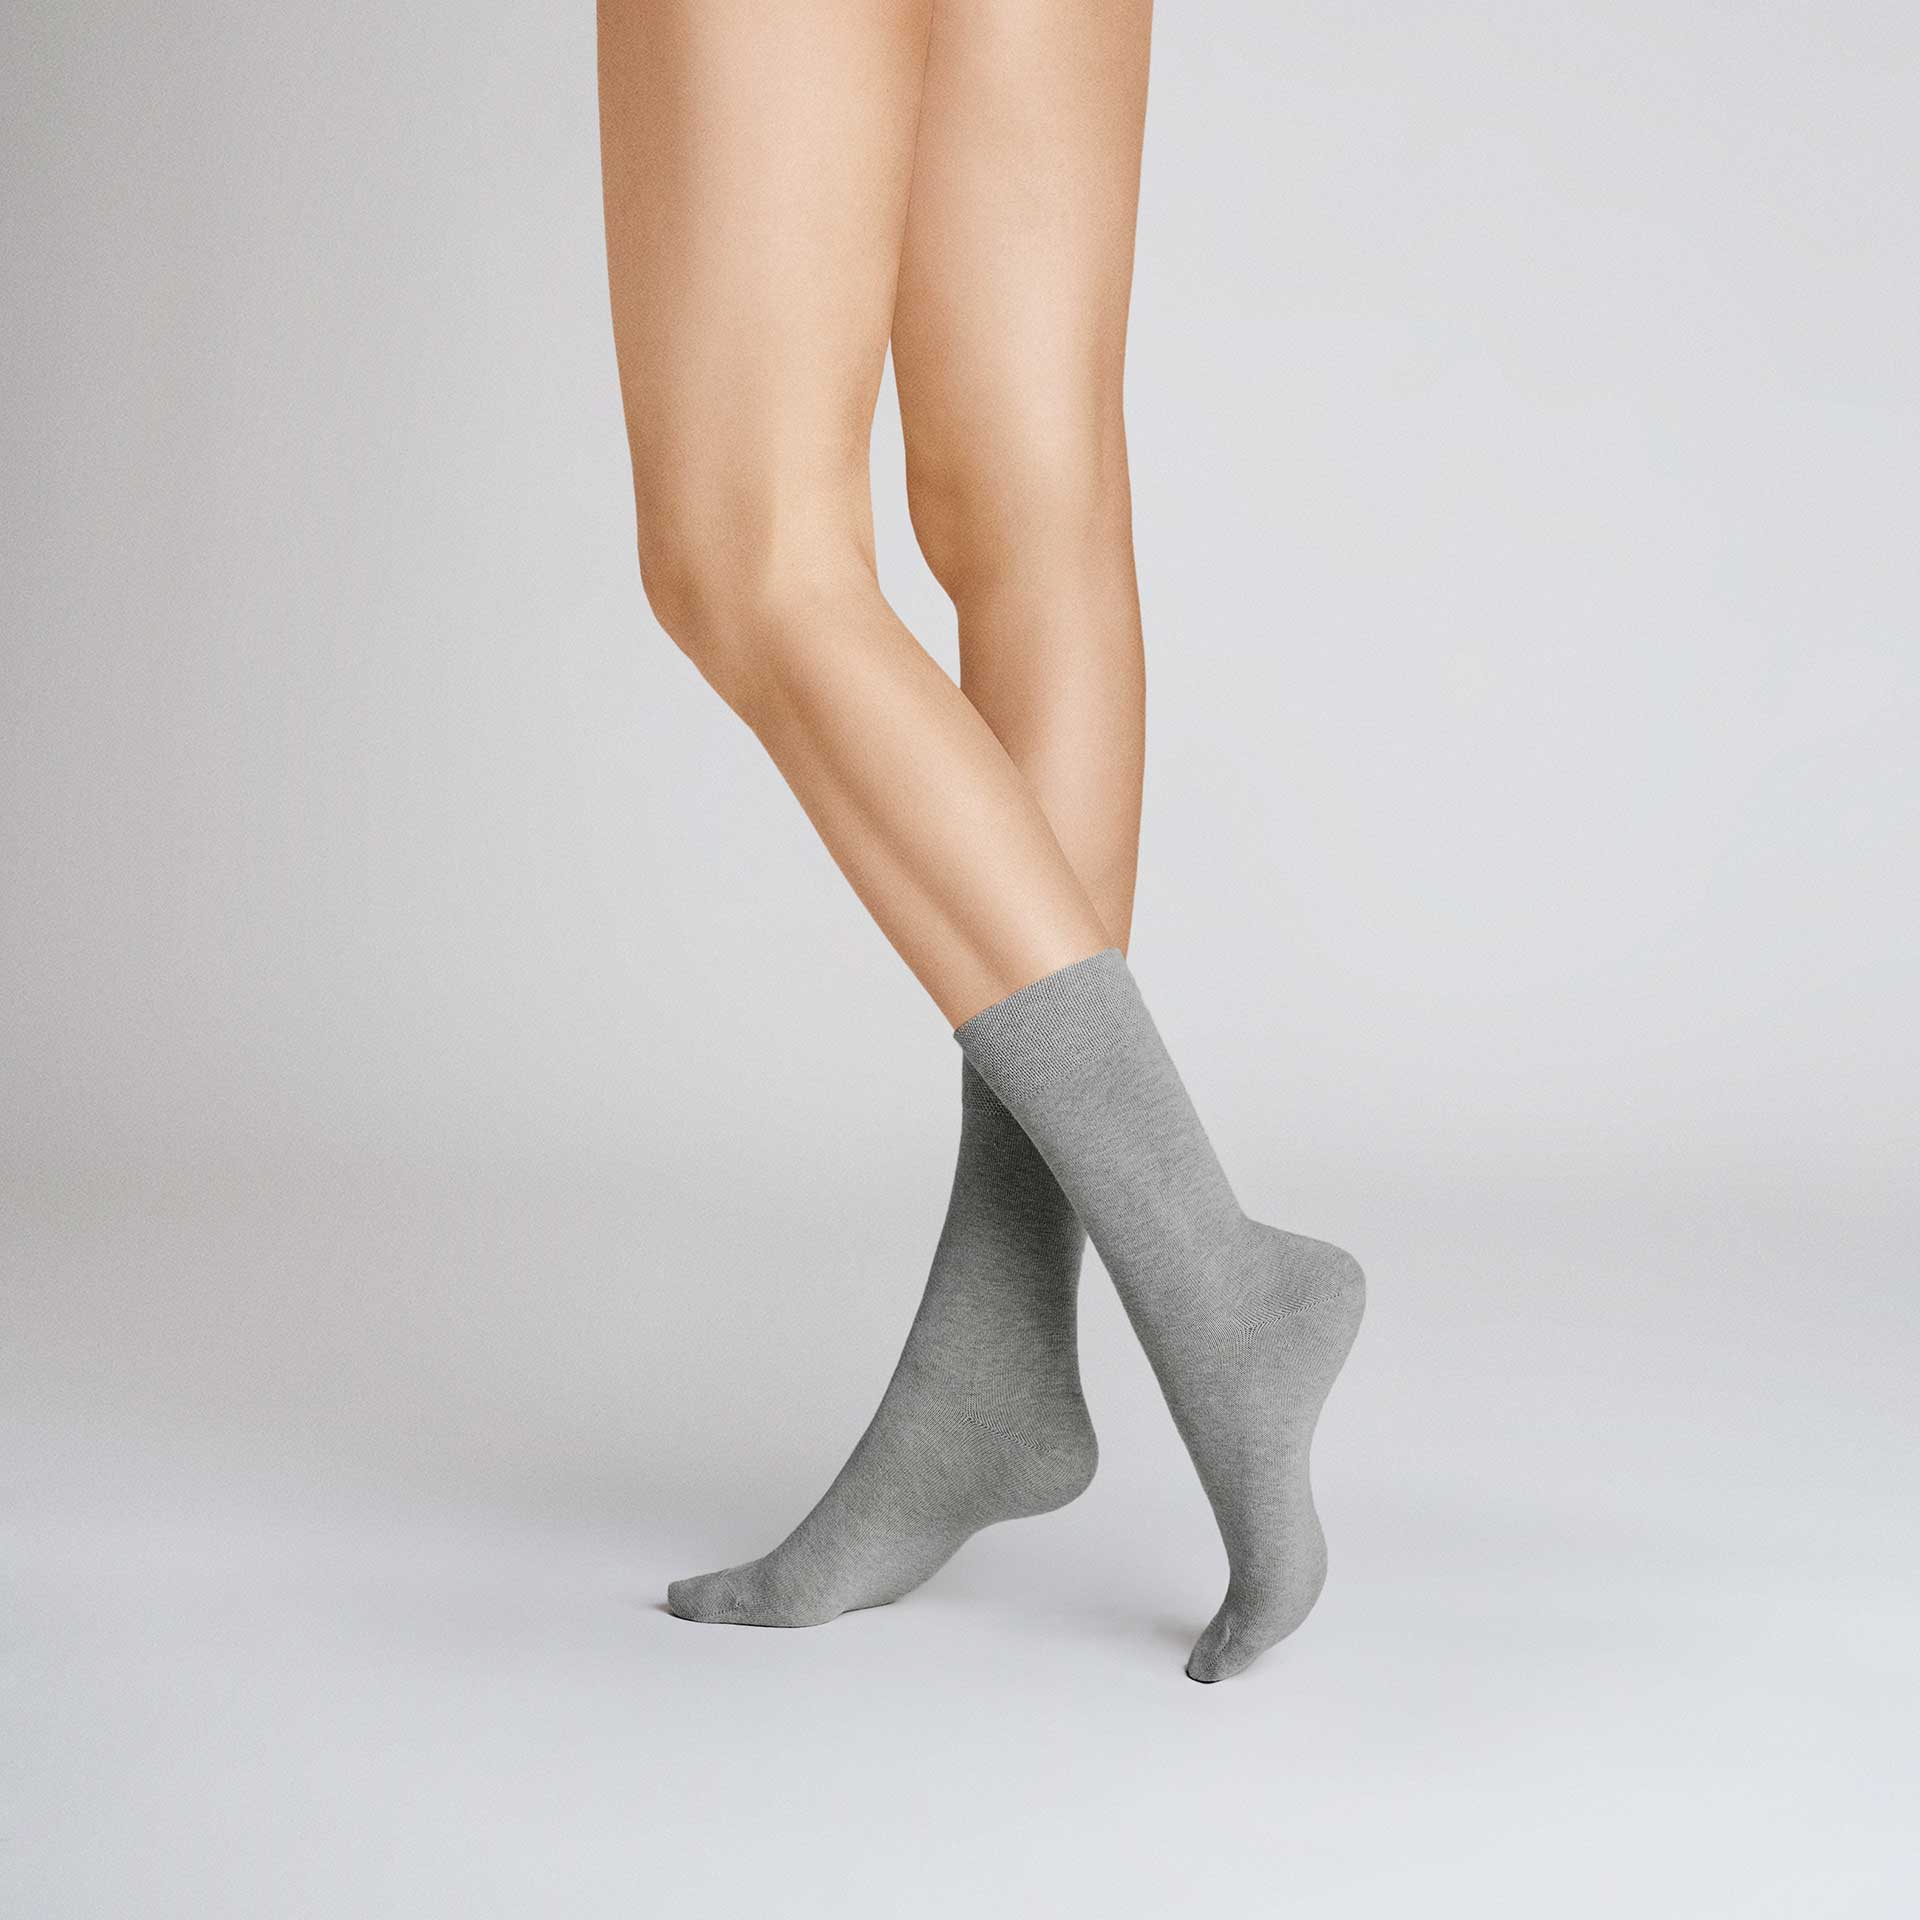 HUDSON Damen RELAX COTTON     -  39/42 - Socken aus 97% Baumwolle - Silber (Grau)